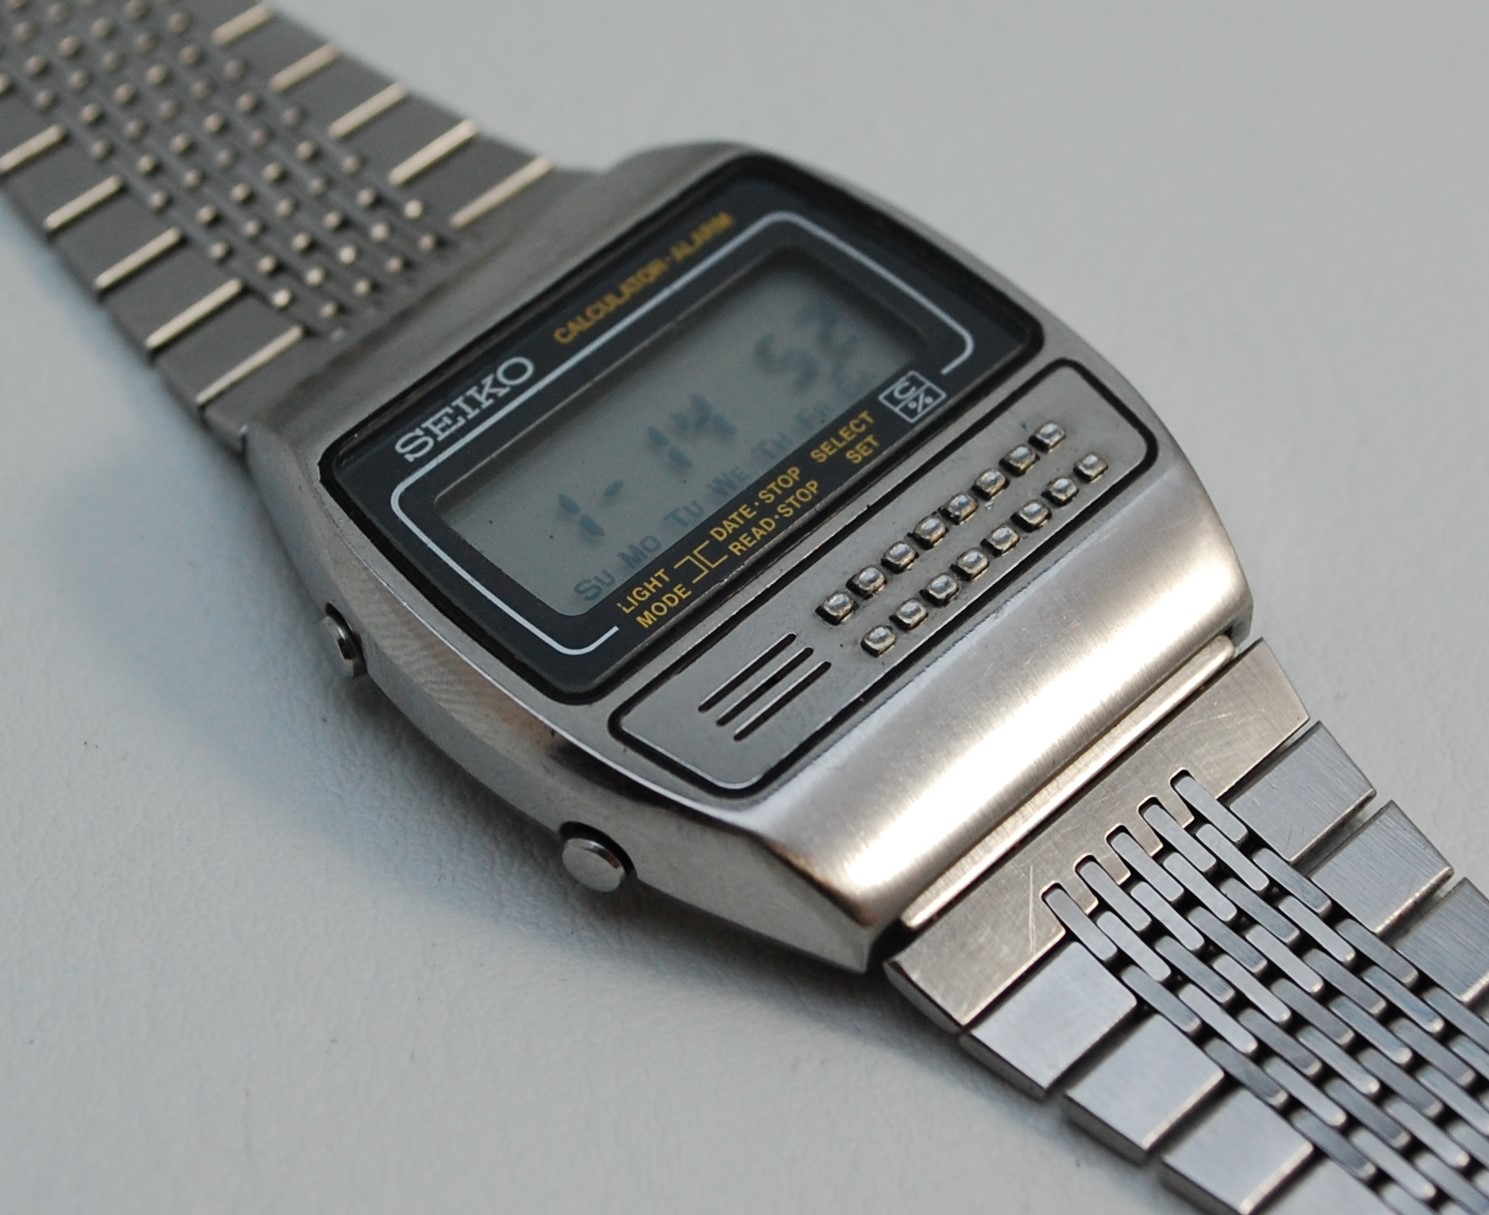 SOLD 1979 Seiko LCD Calculator Alarm watch C359-5000 - Birth Year Watches